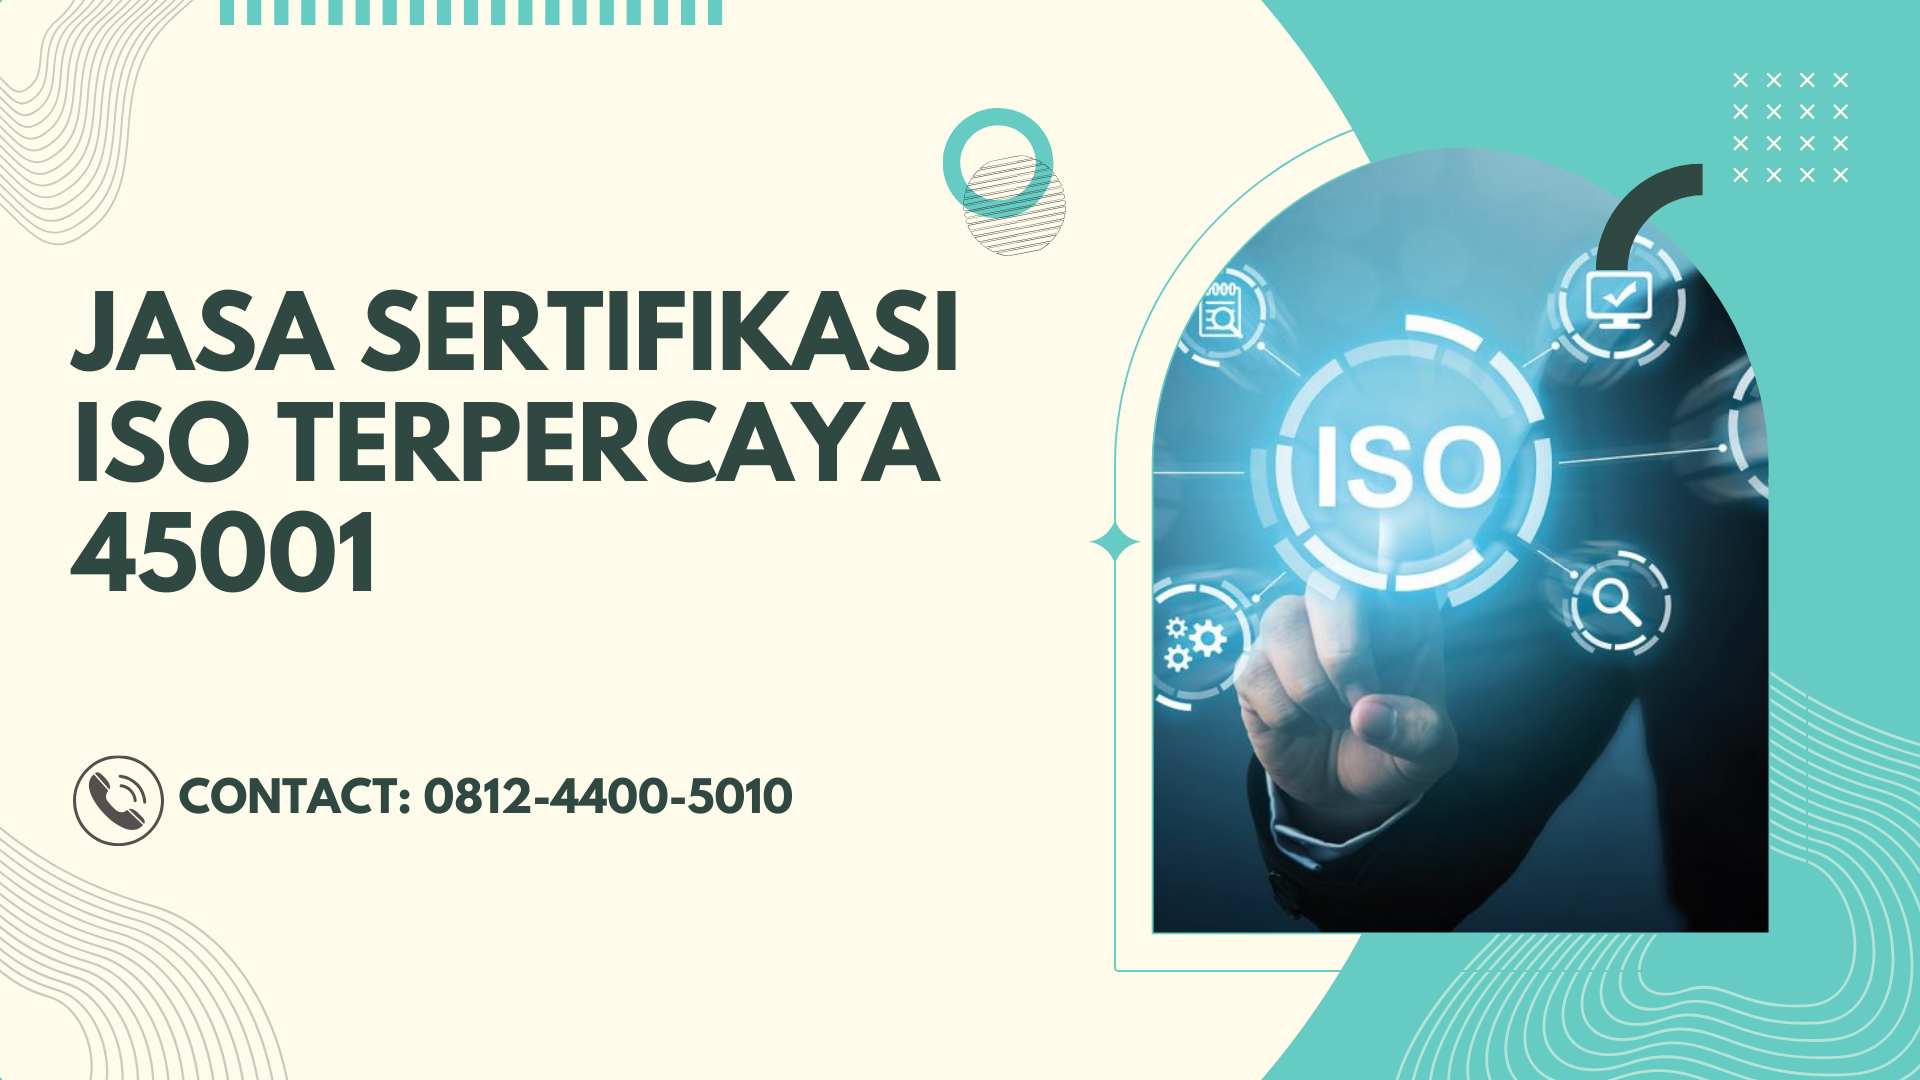 Jasa Sertifikasi ISO Terpercaya 45001